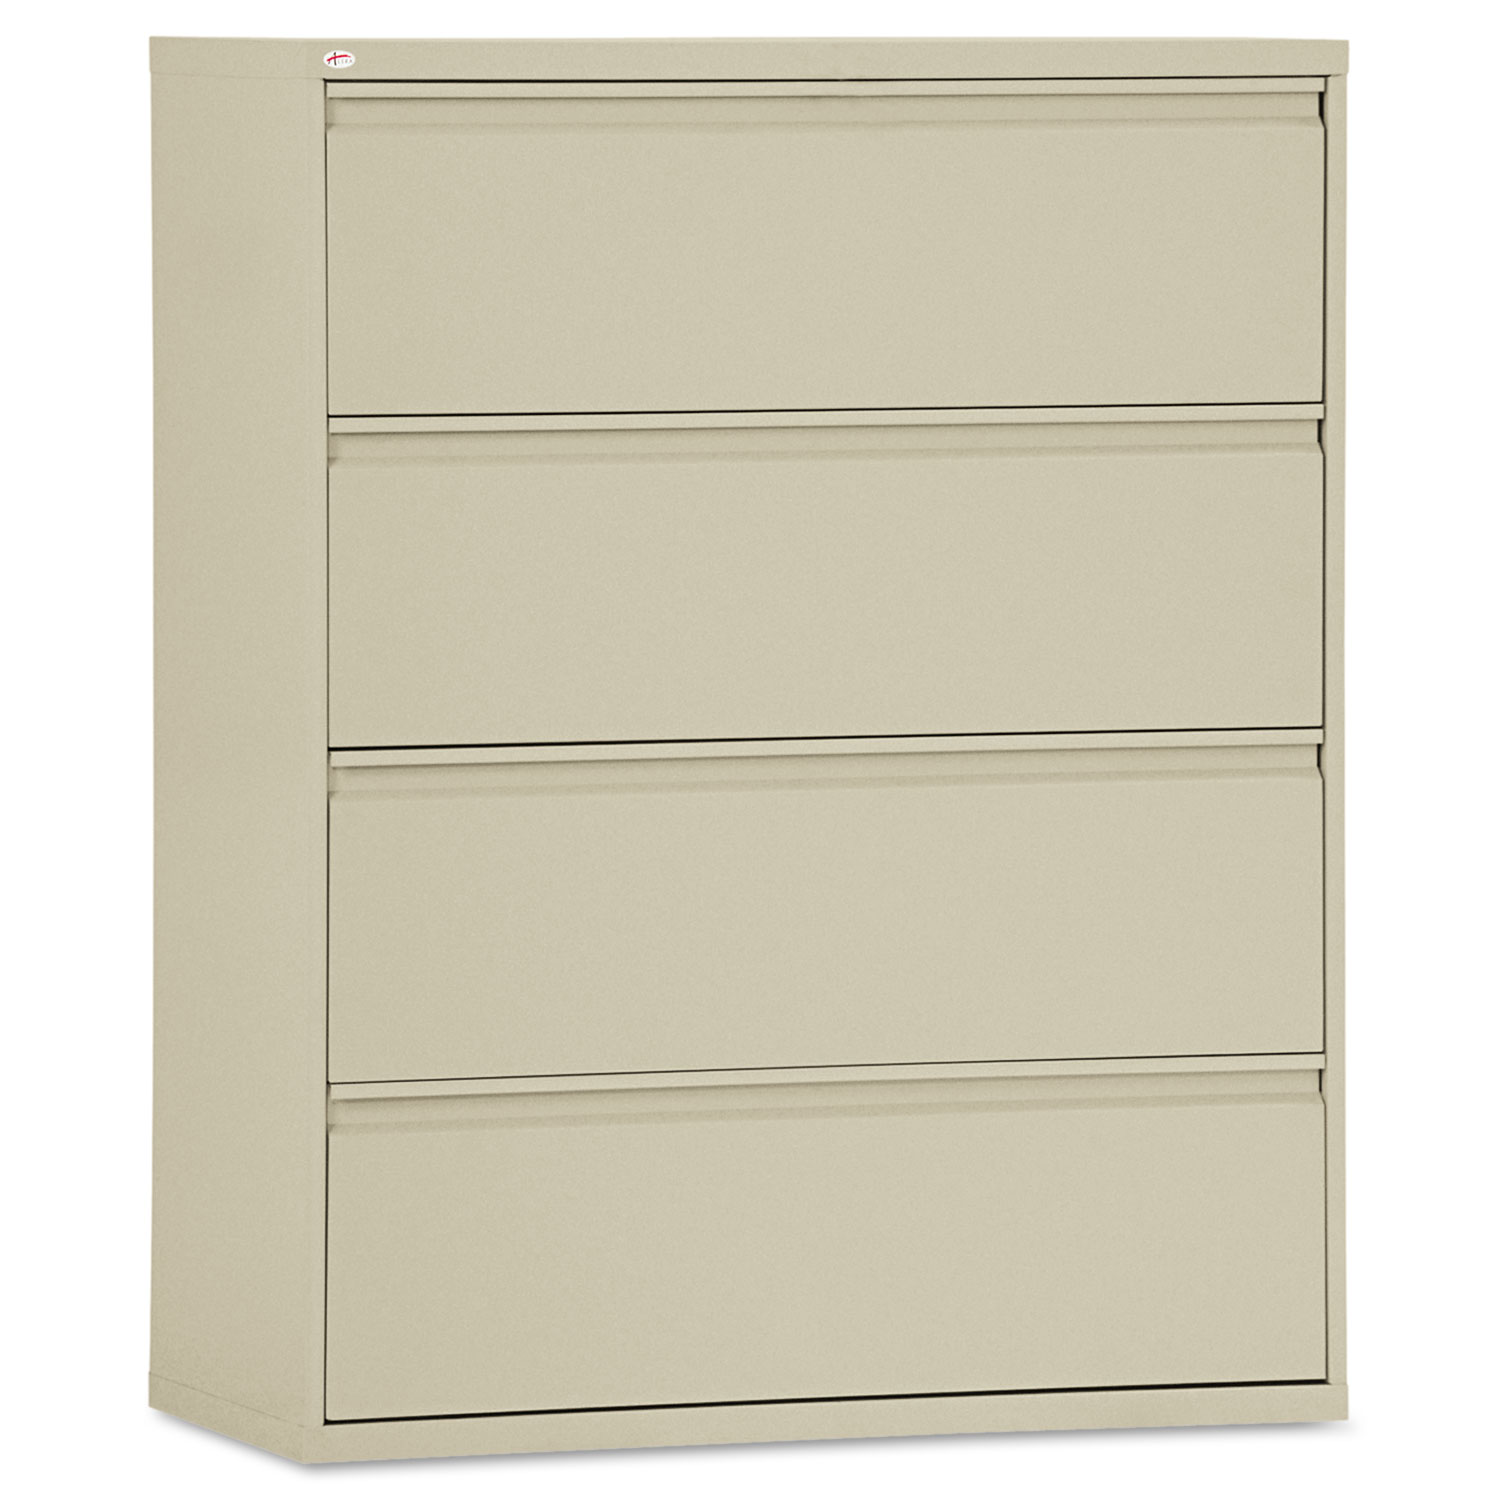  Alera ALELF4254PY Four-Drawer Lateral File Cabinet, 42w x 18d x 52.5h, Putty (ALELF4254PY) 